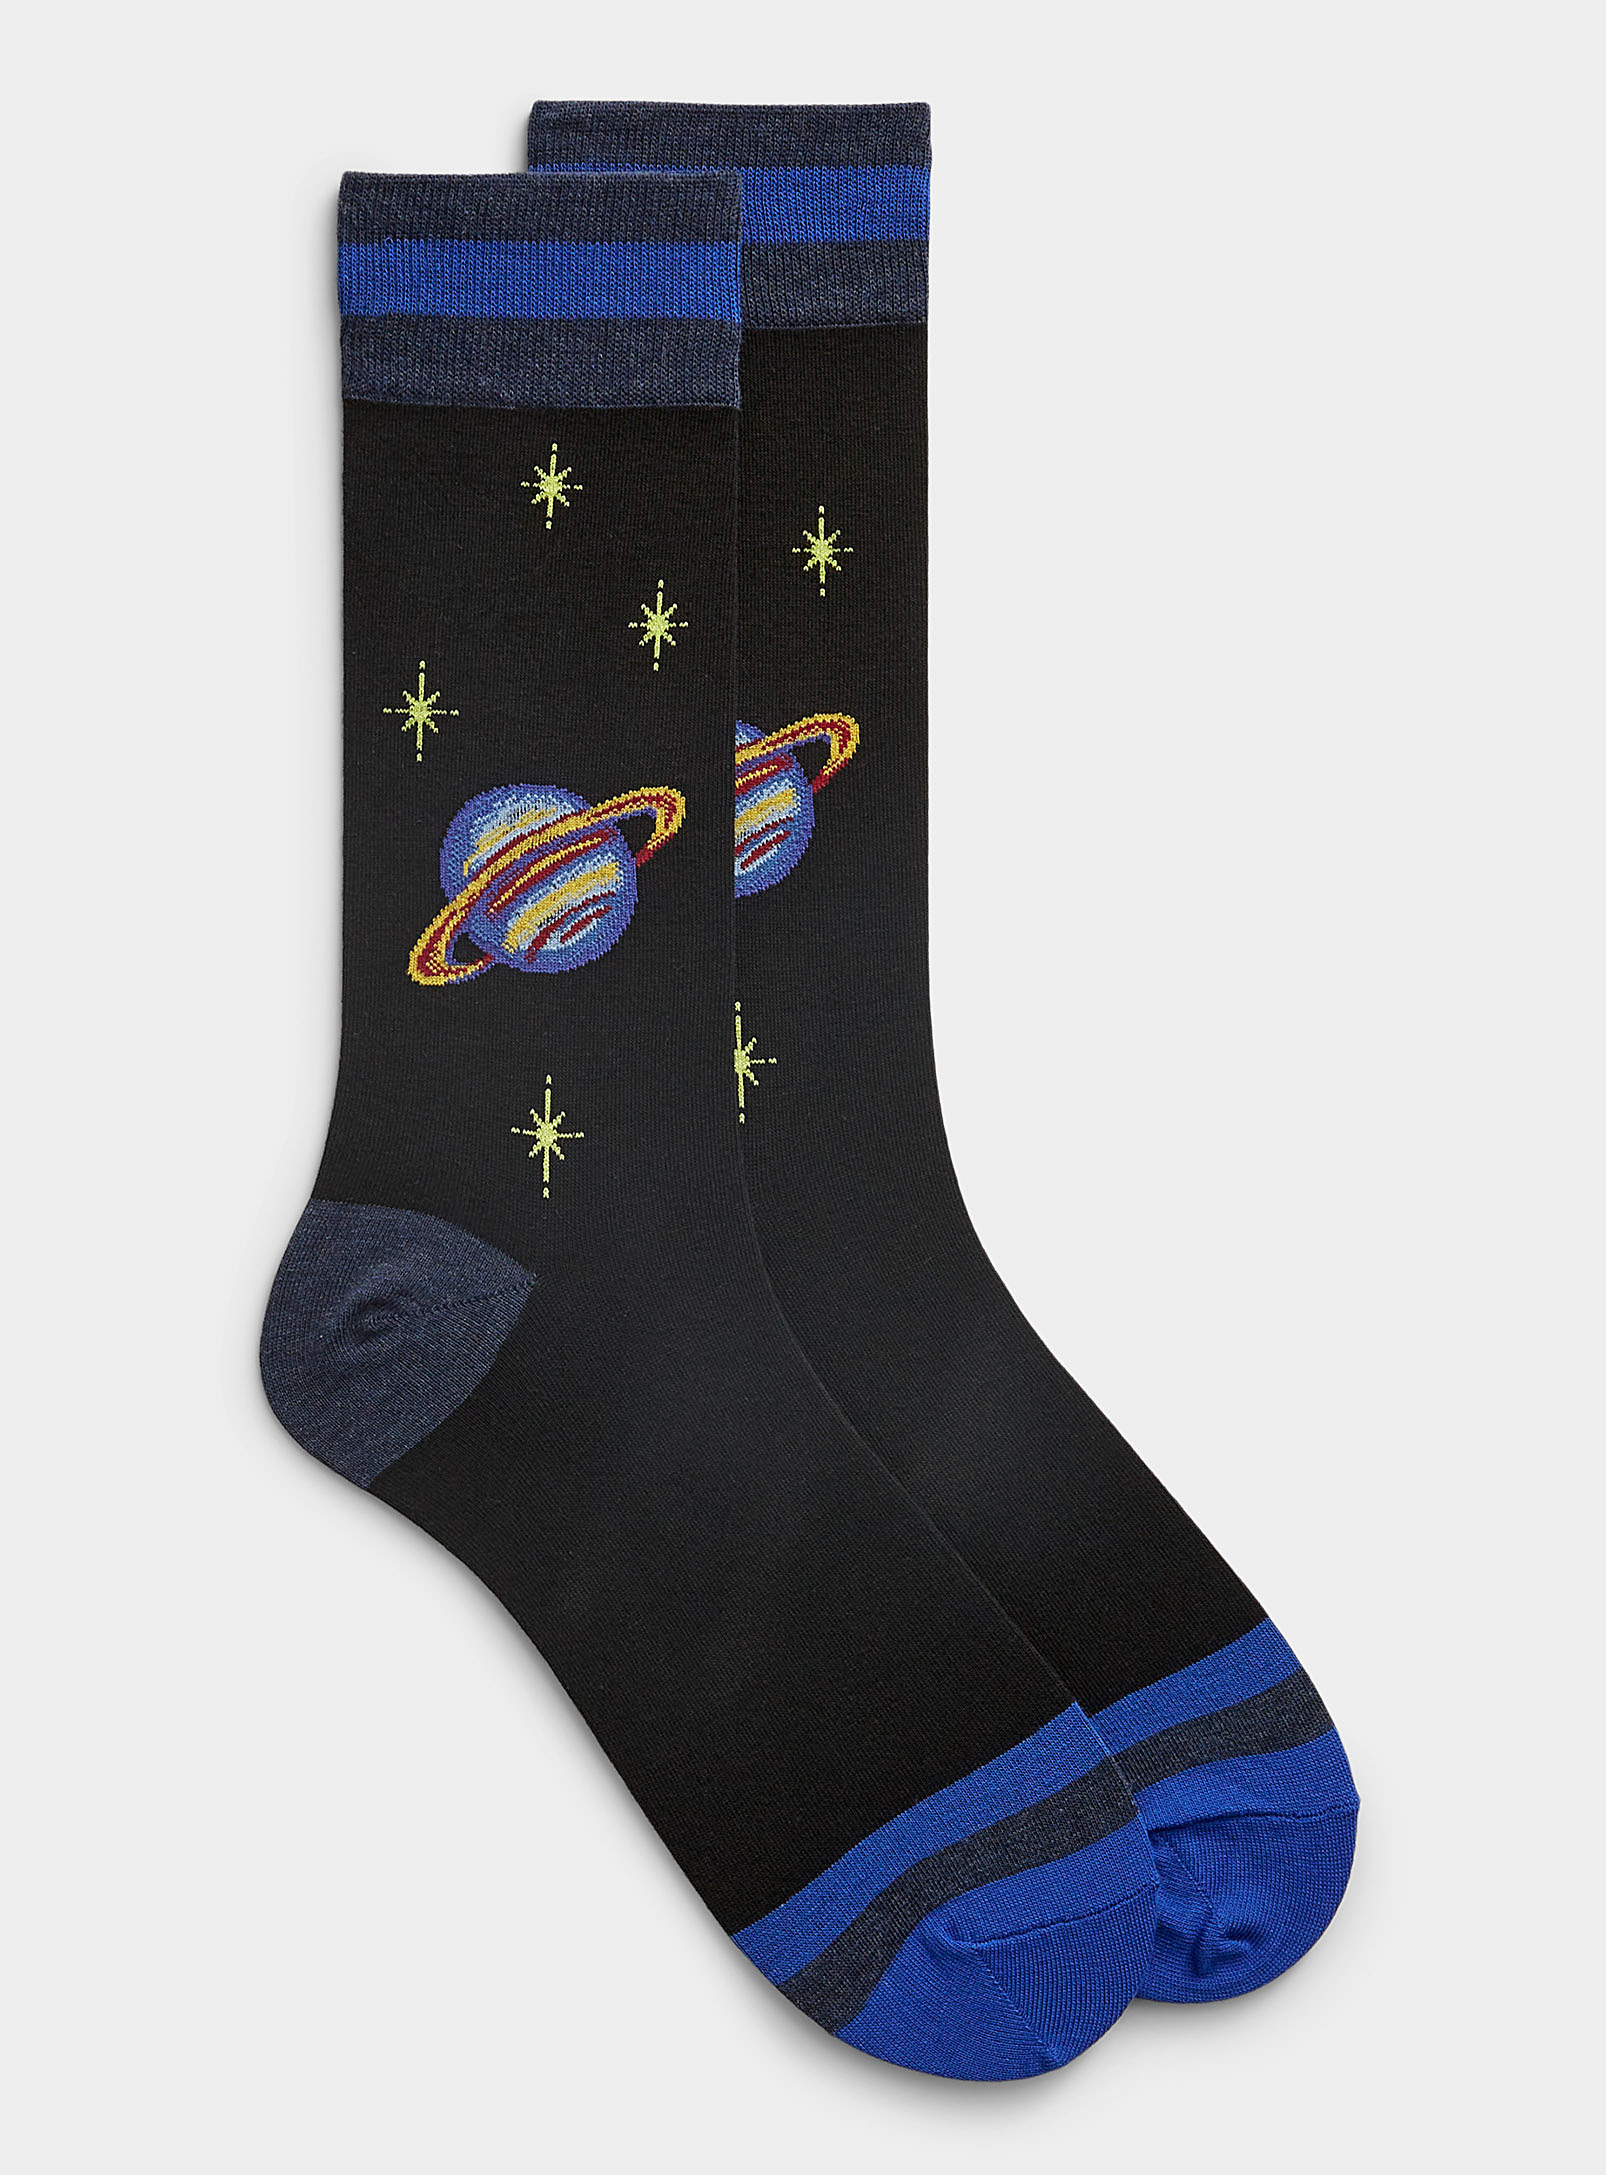 Hot Sox - Men's Planet Saturn sock